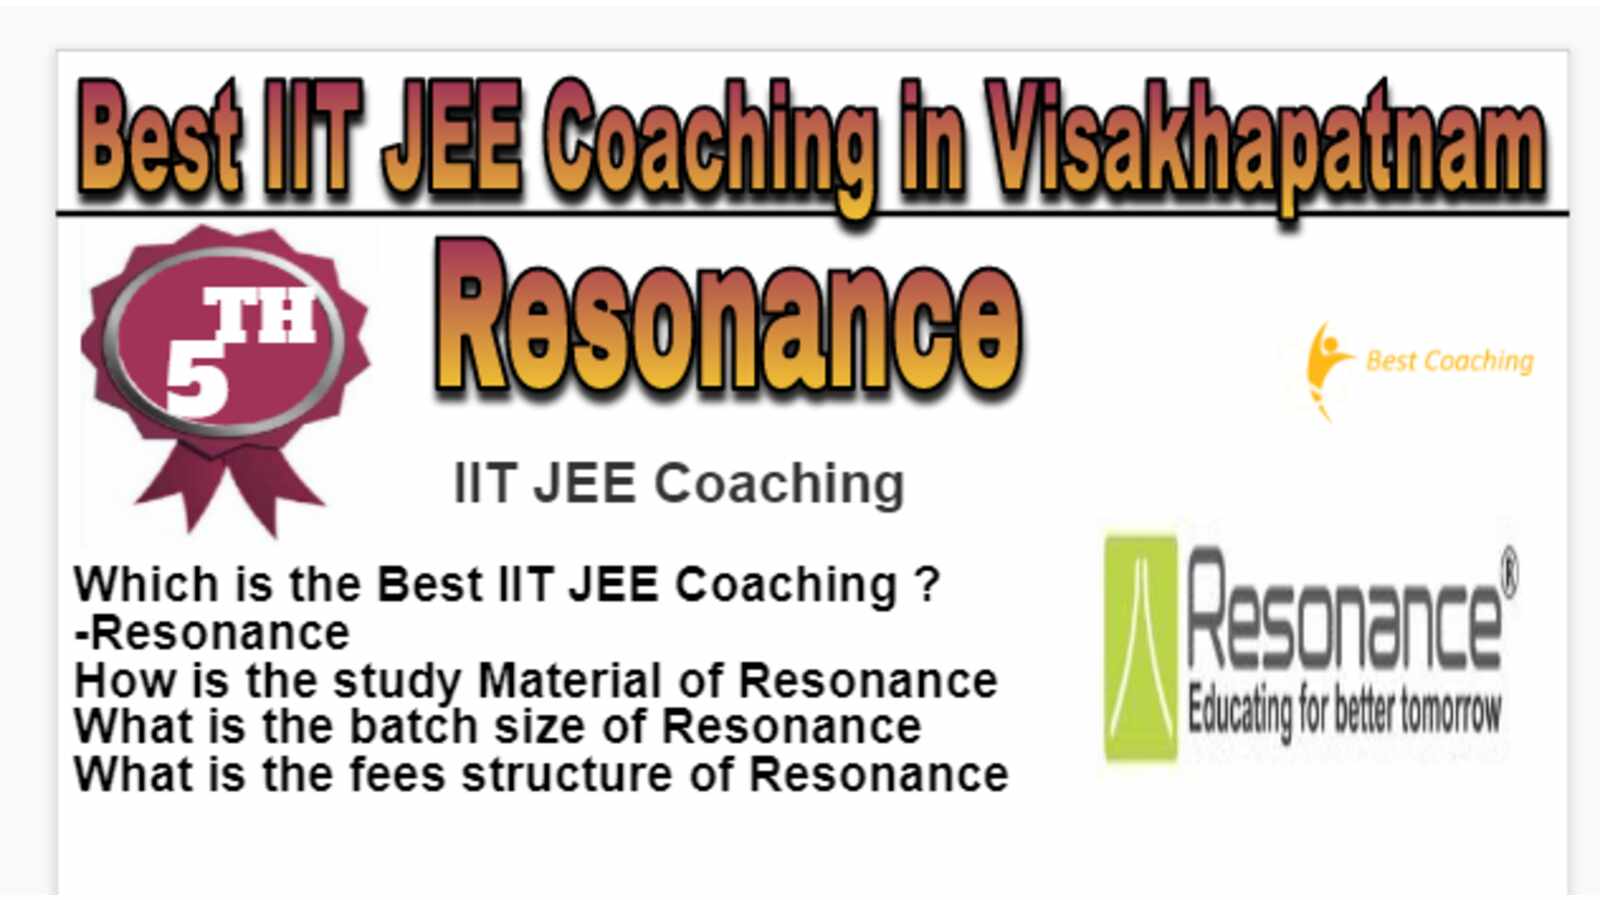 Rank 5 Best IIT JEE Coaching in Visakhapatnam